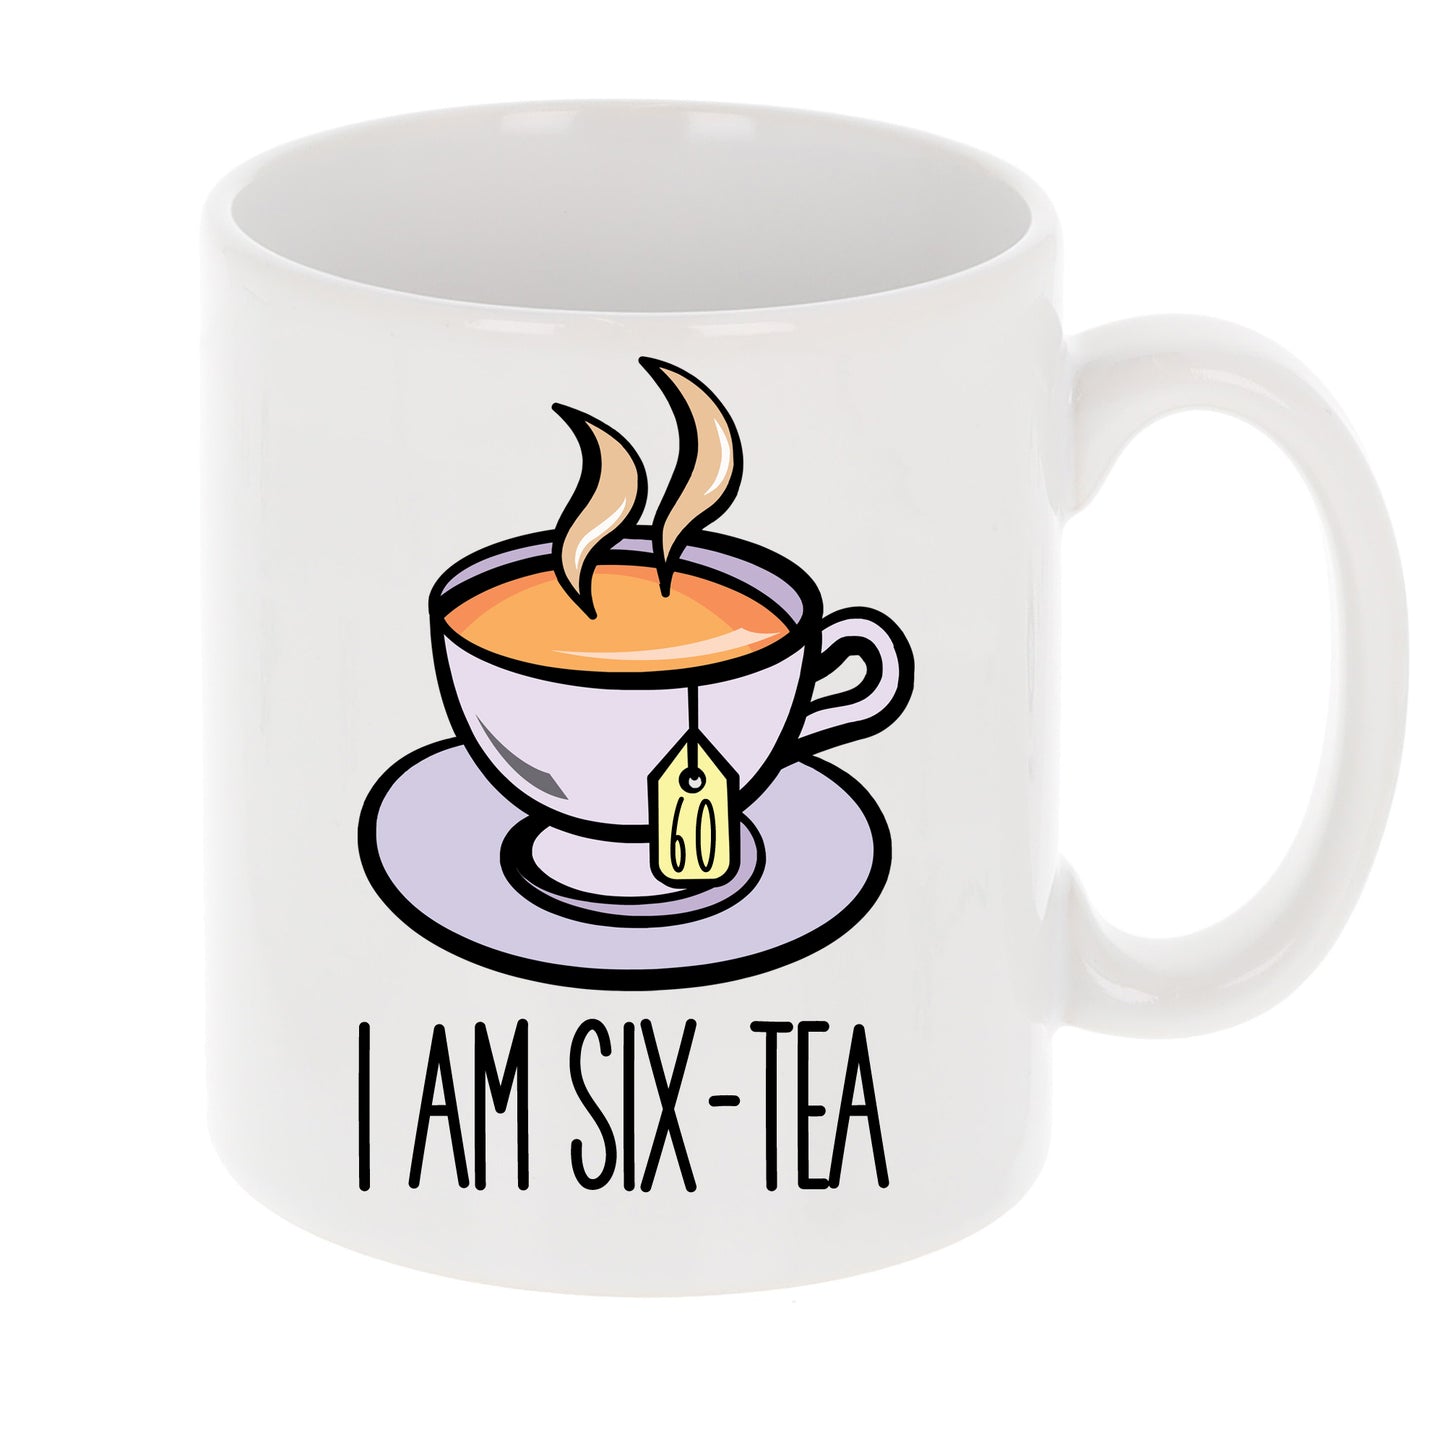 I Am Six-Tea Funny 60th Birthday Mug Gift for Tea Lovers  - Always Looking Good - Mug Only  